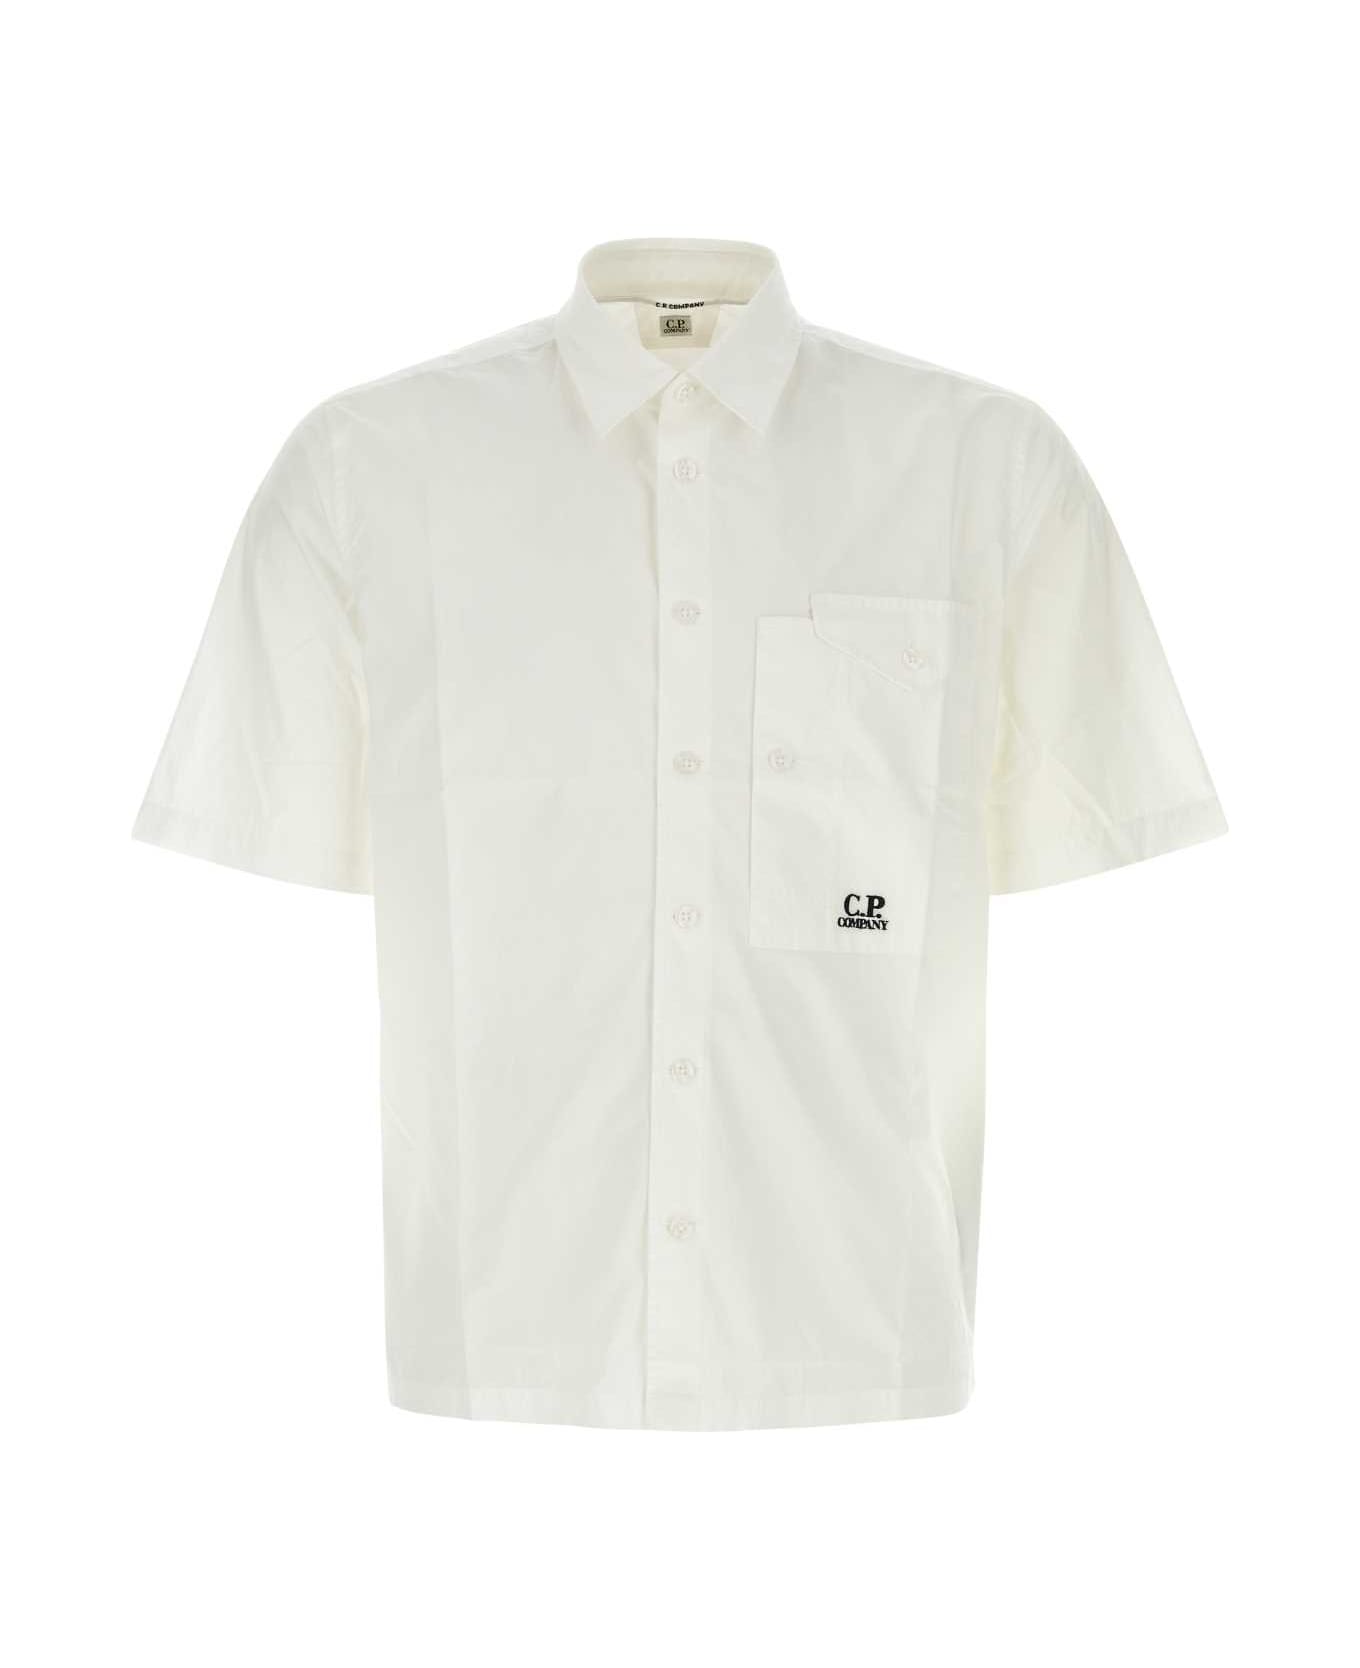 C.P. Company White Cotton Shirt - GAUZEWHITE